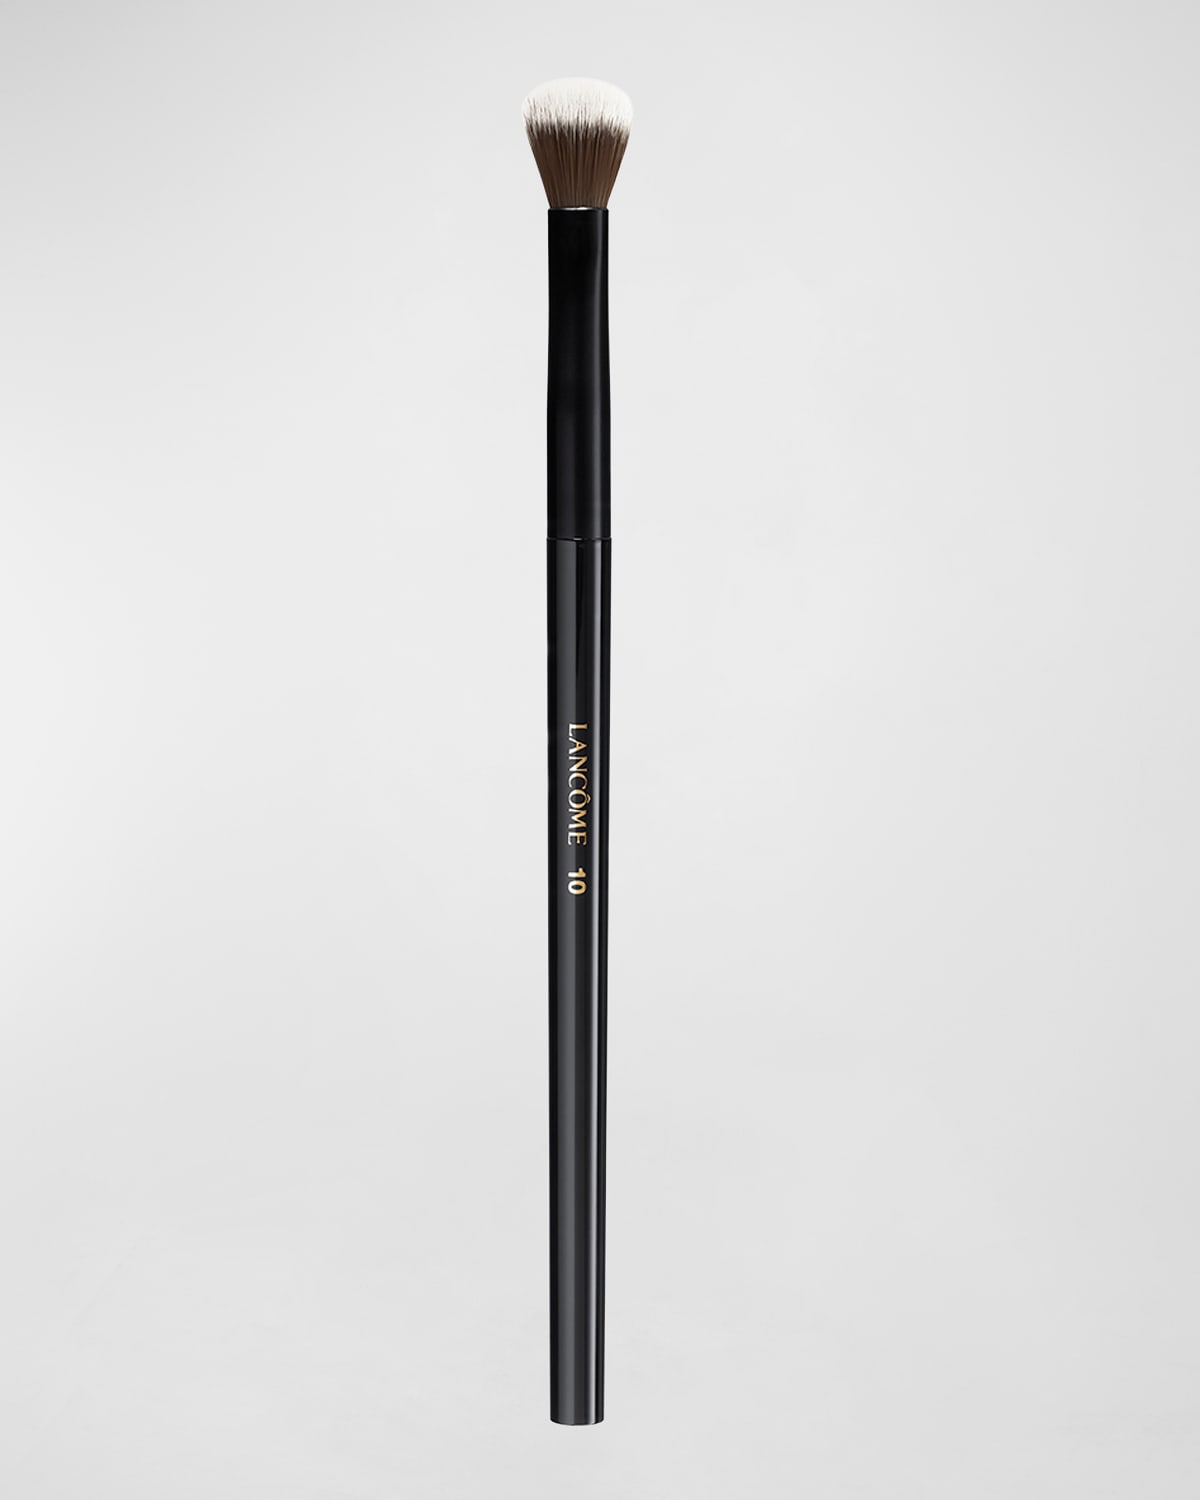 Lancôme All Over Blending & Sculpting Shadow Brush #10 In Black